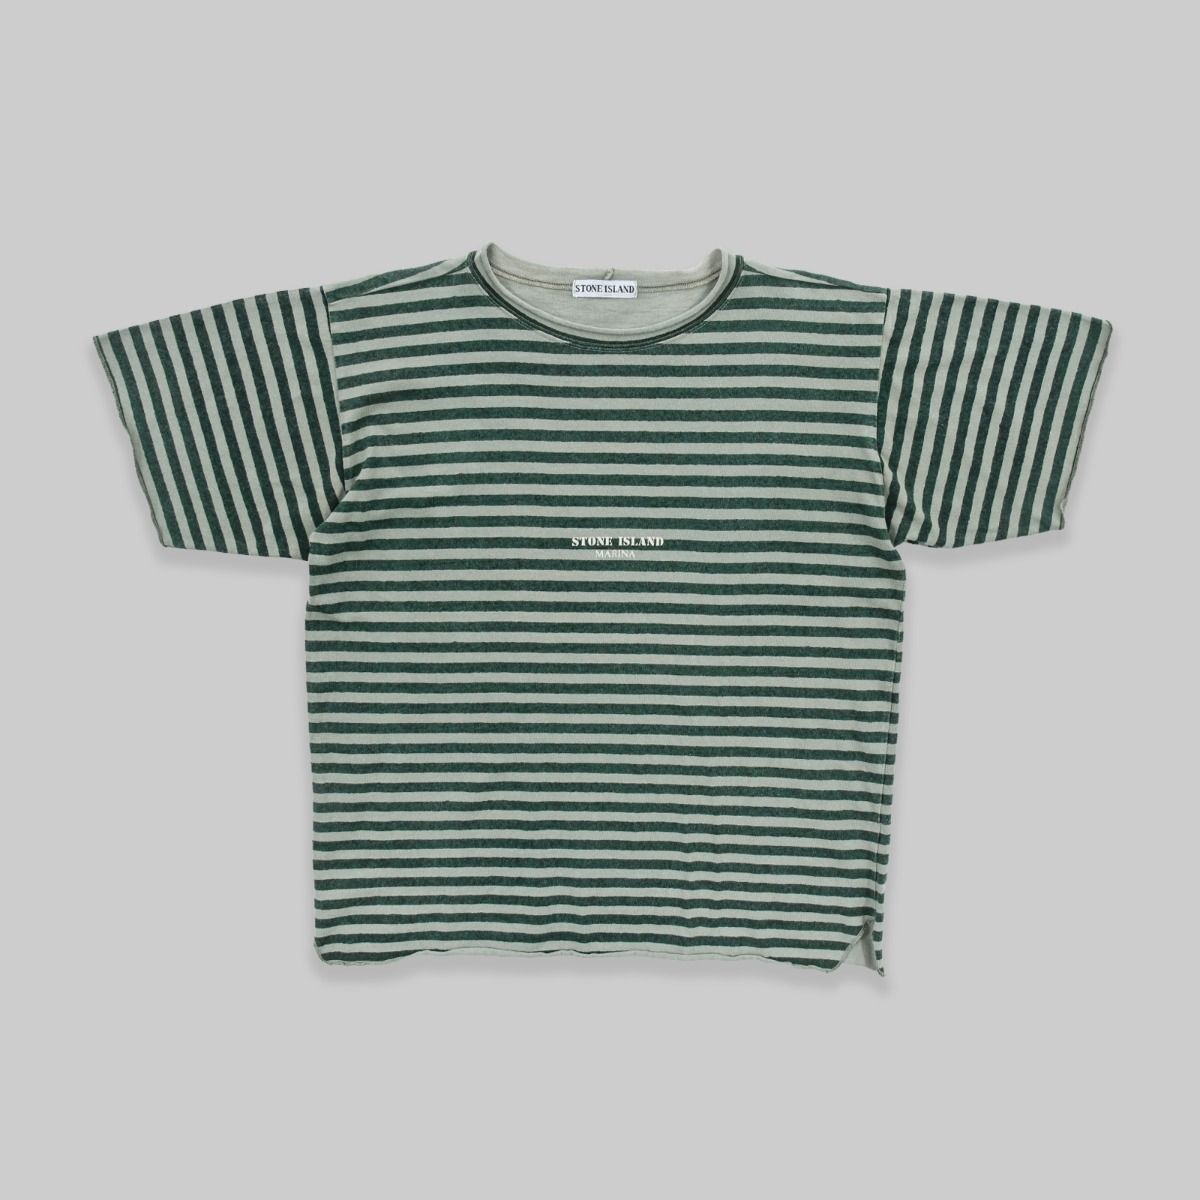 Stone Island Marina 1991 Striped T-Shirt